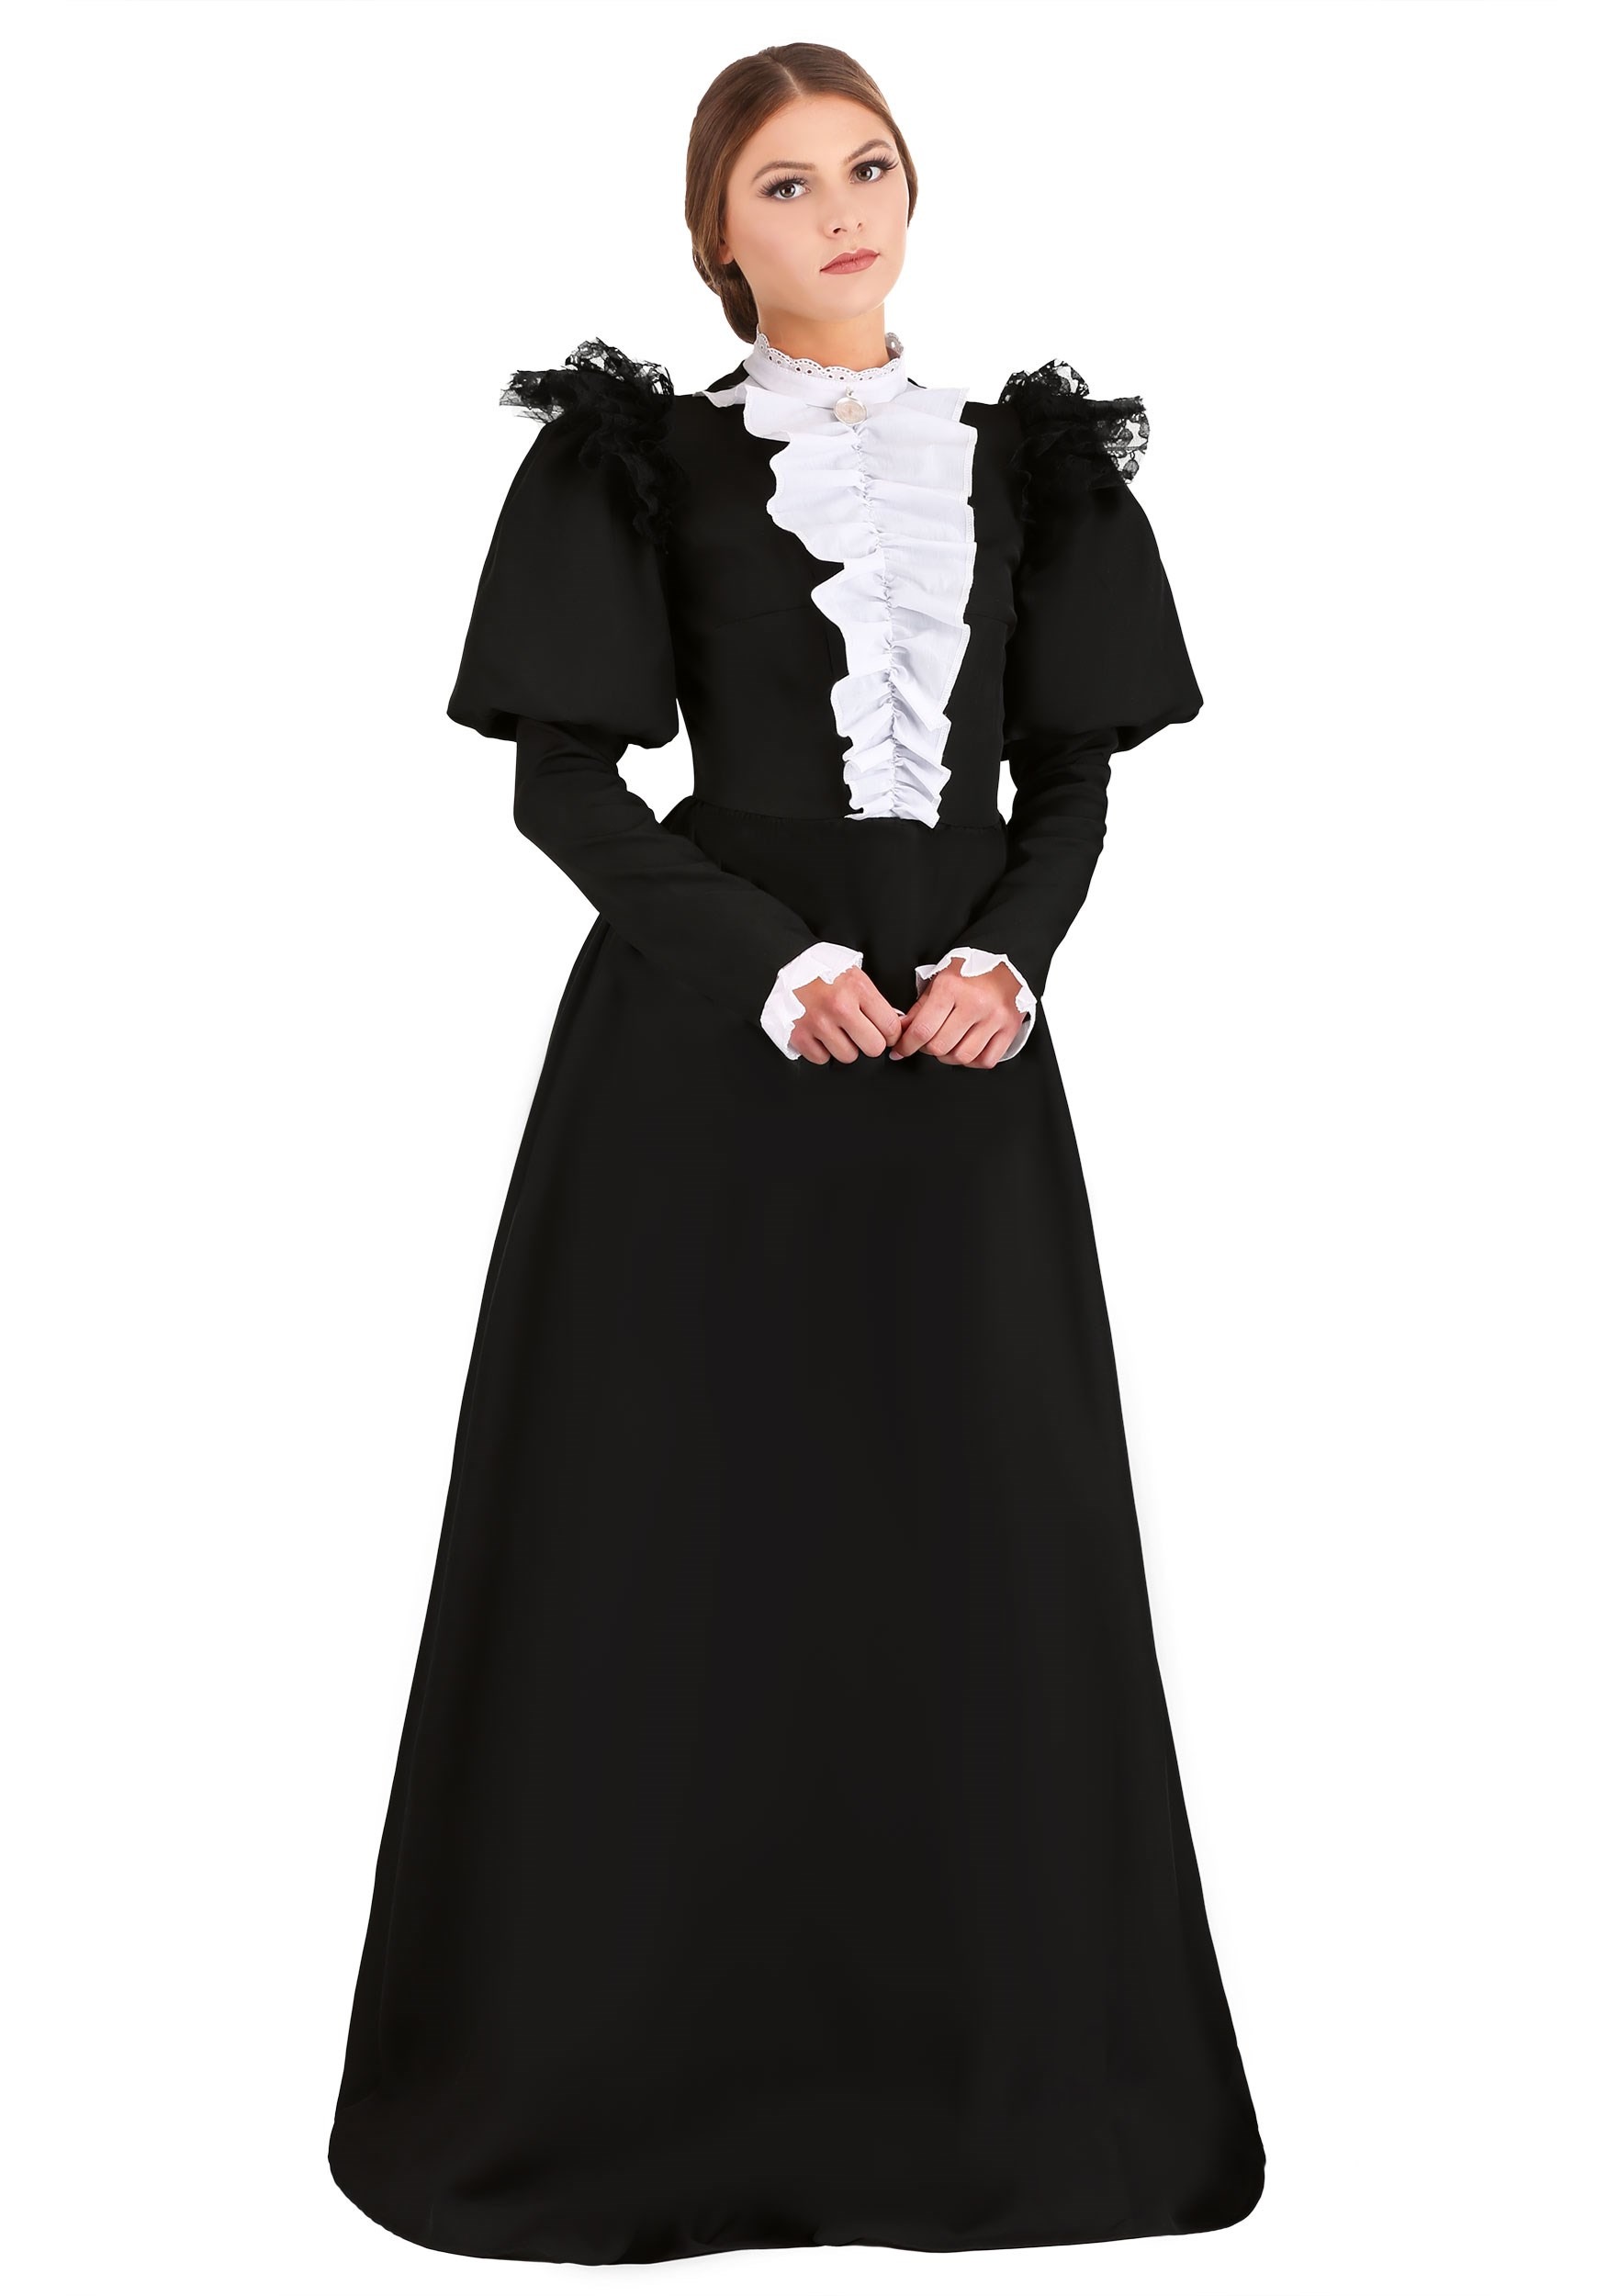 Susan B. Anthony Victorian Women's Fancy Dress Costume